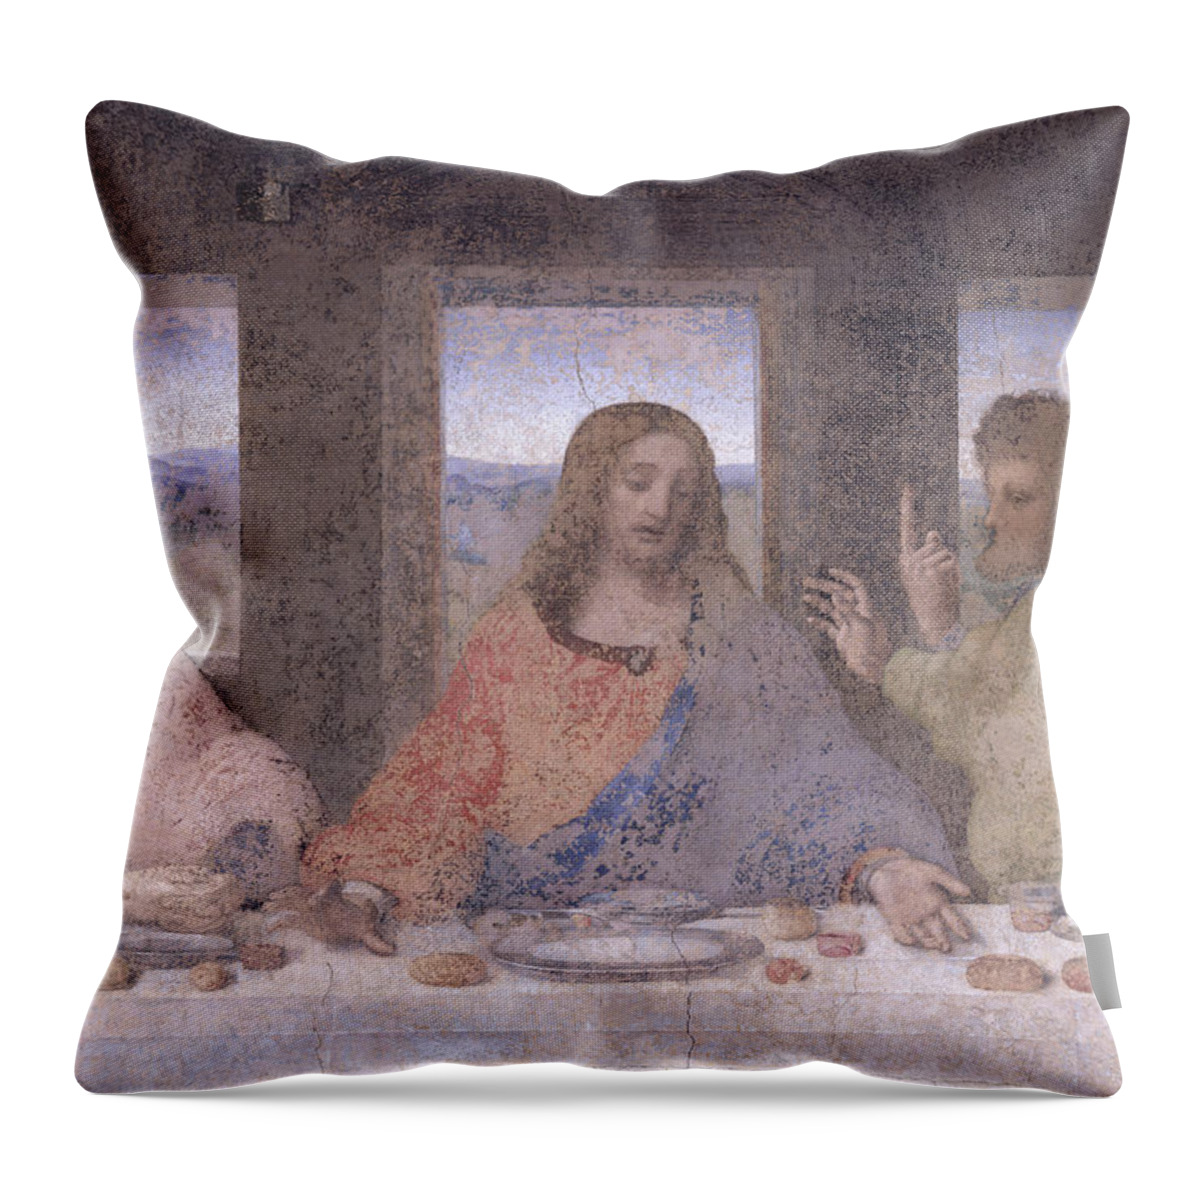 Leonardo Throw Pillow featuring the painting The Last Supper by Leonardo Da Vinci